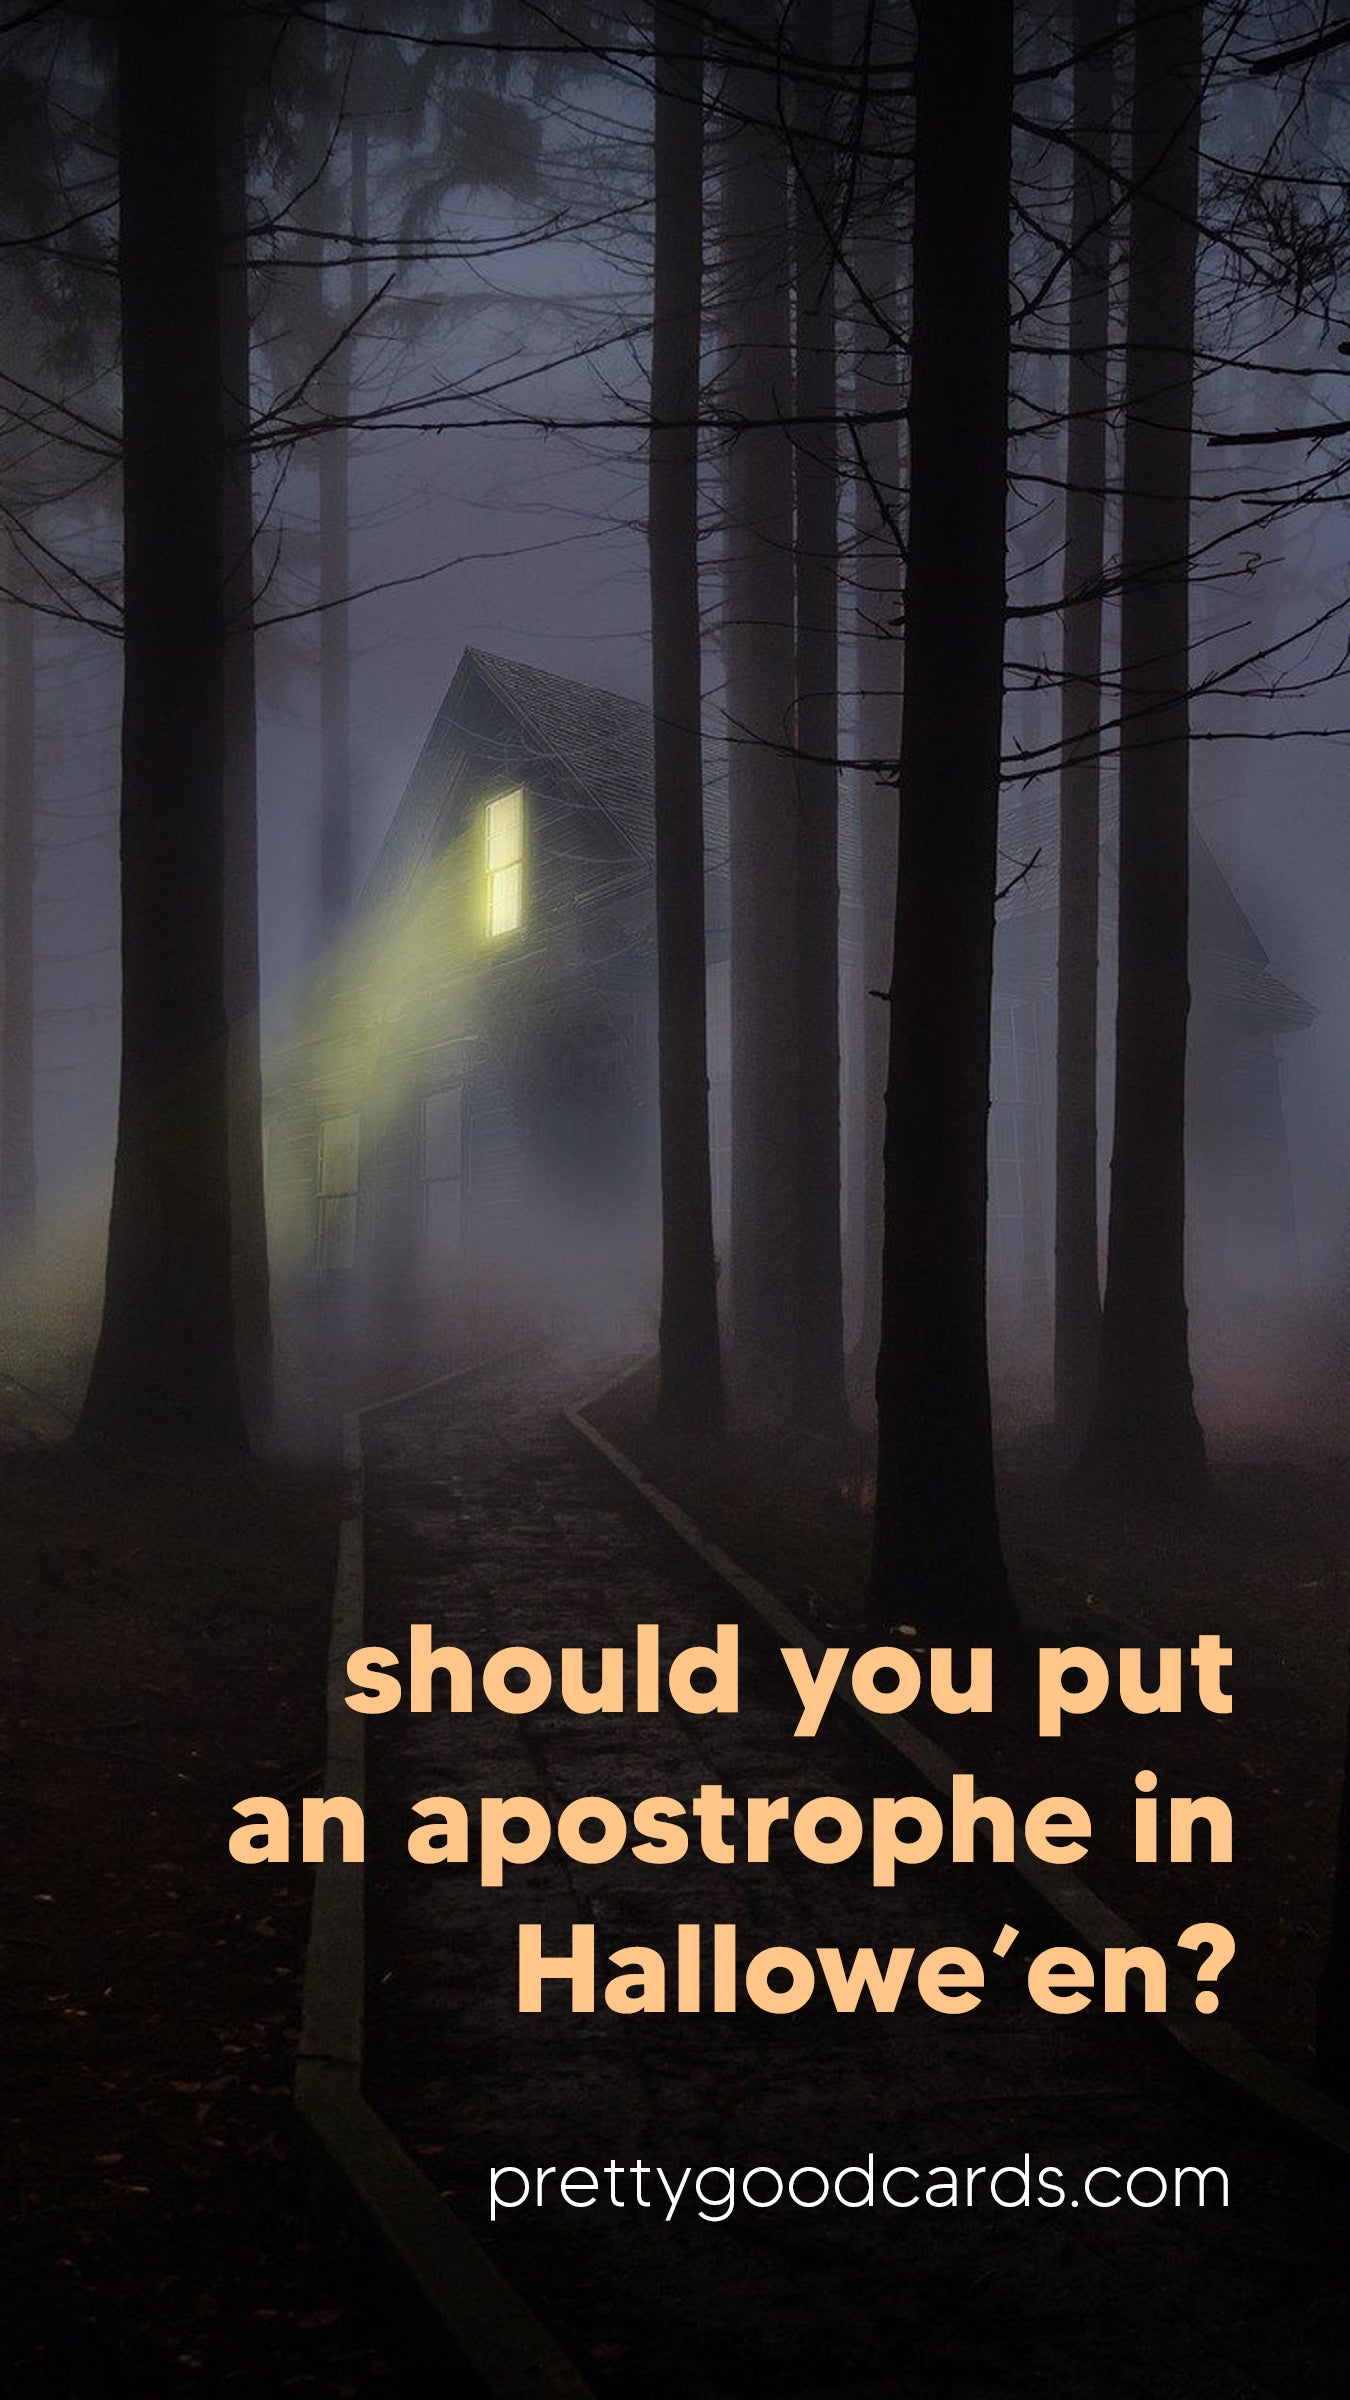 Should You Put an Apostrophe in Hallowe’en?